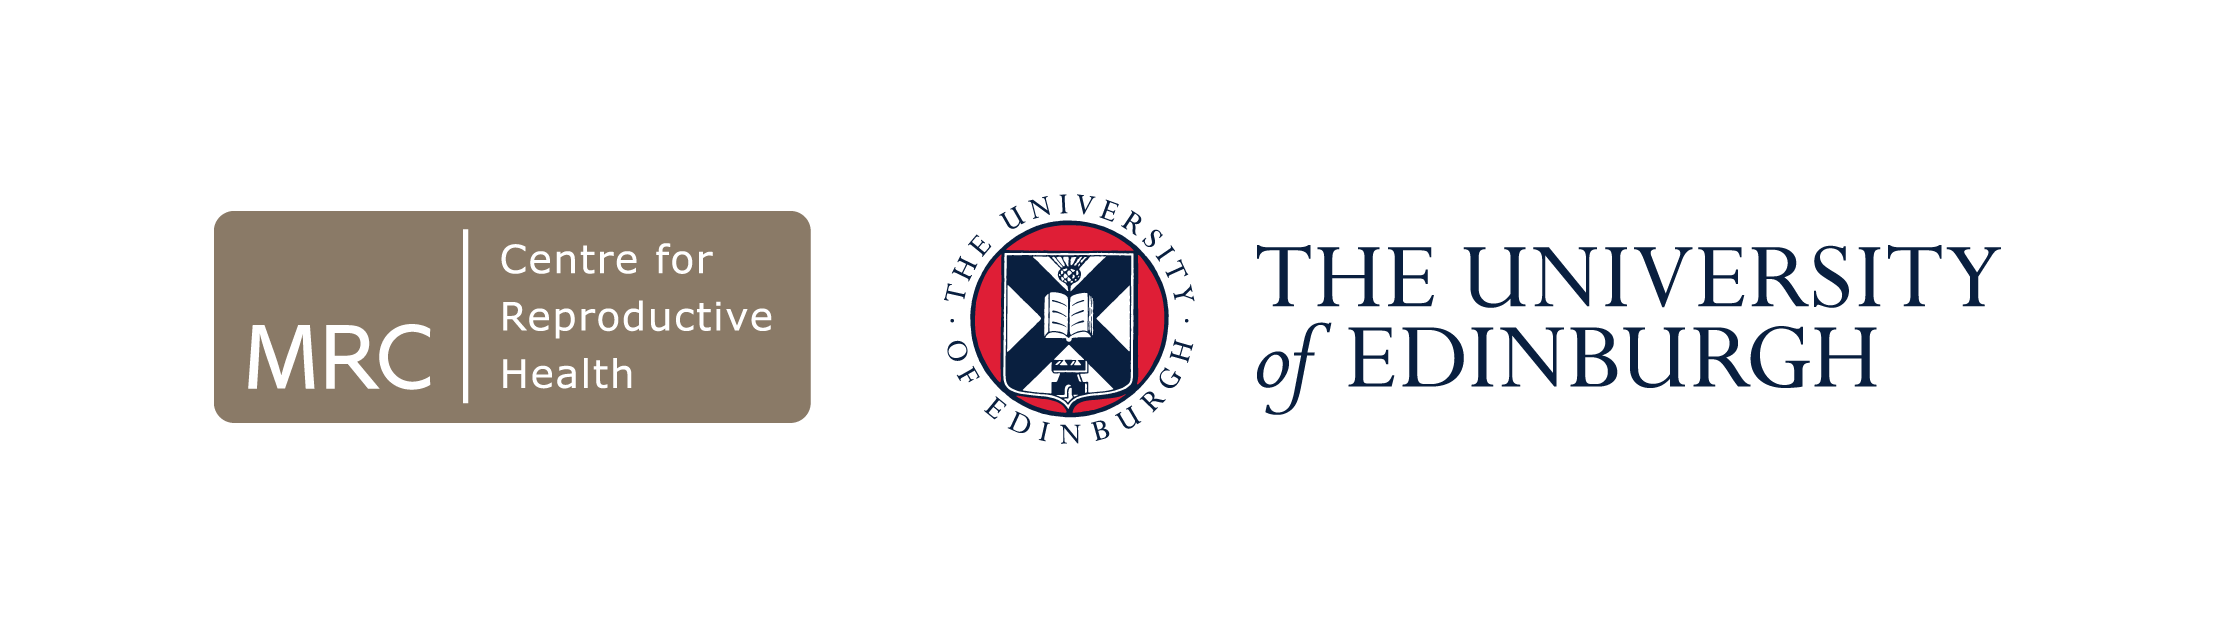 CRH Logo - Edinburgh establishment logos us Research Council